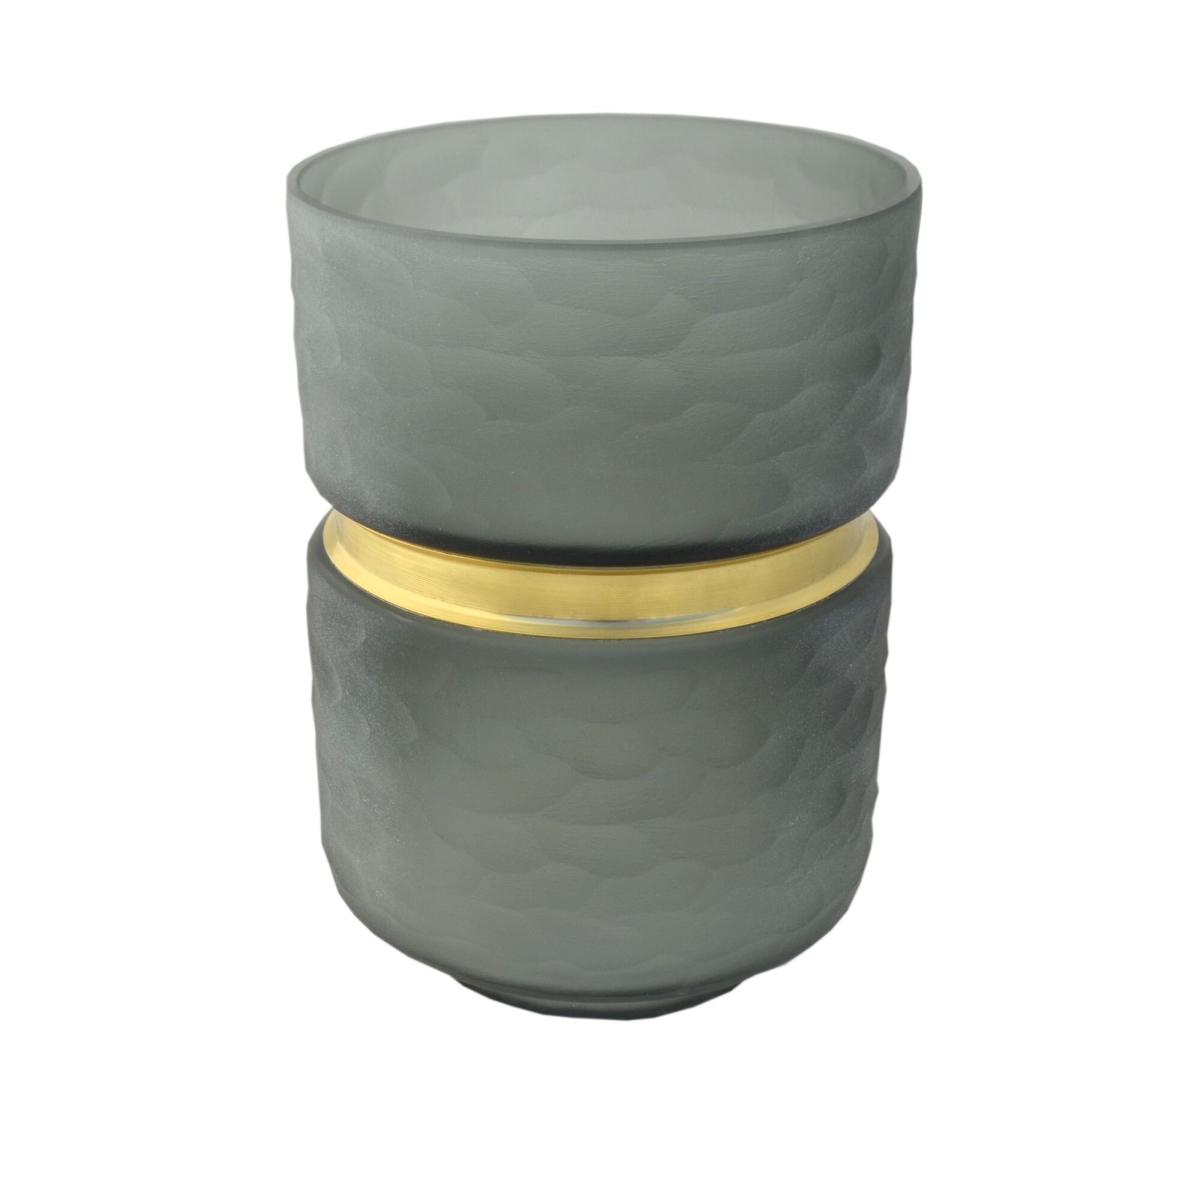 Wg-06g Leech Vase, Grey